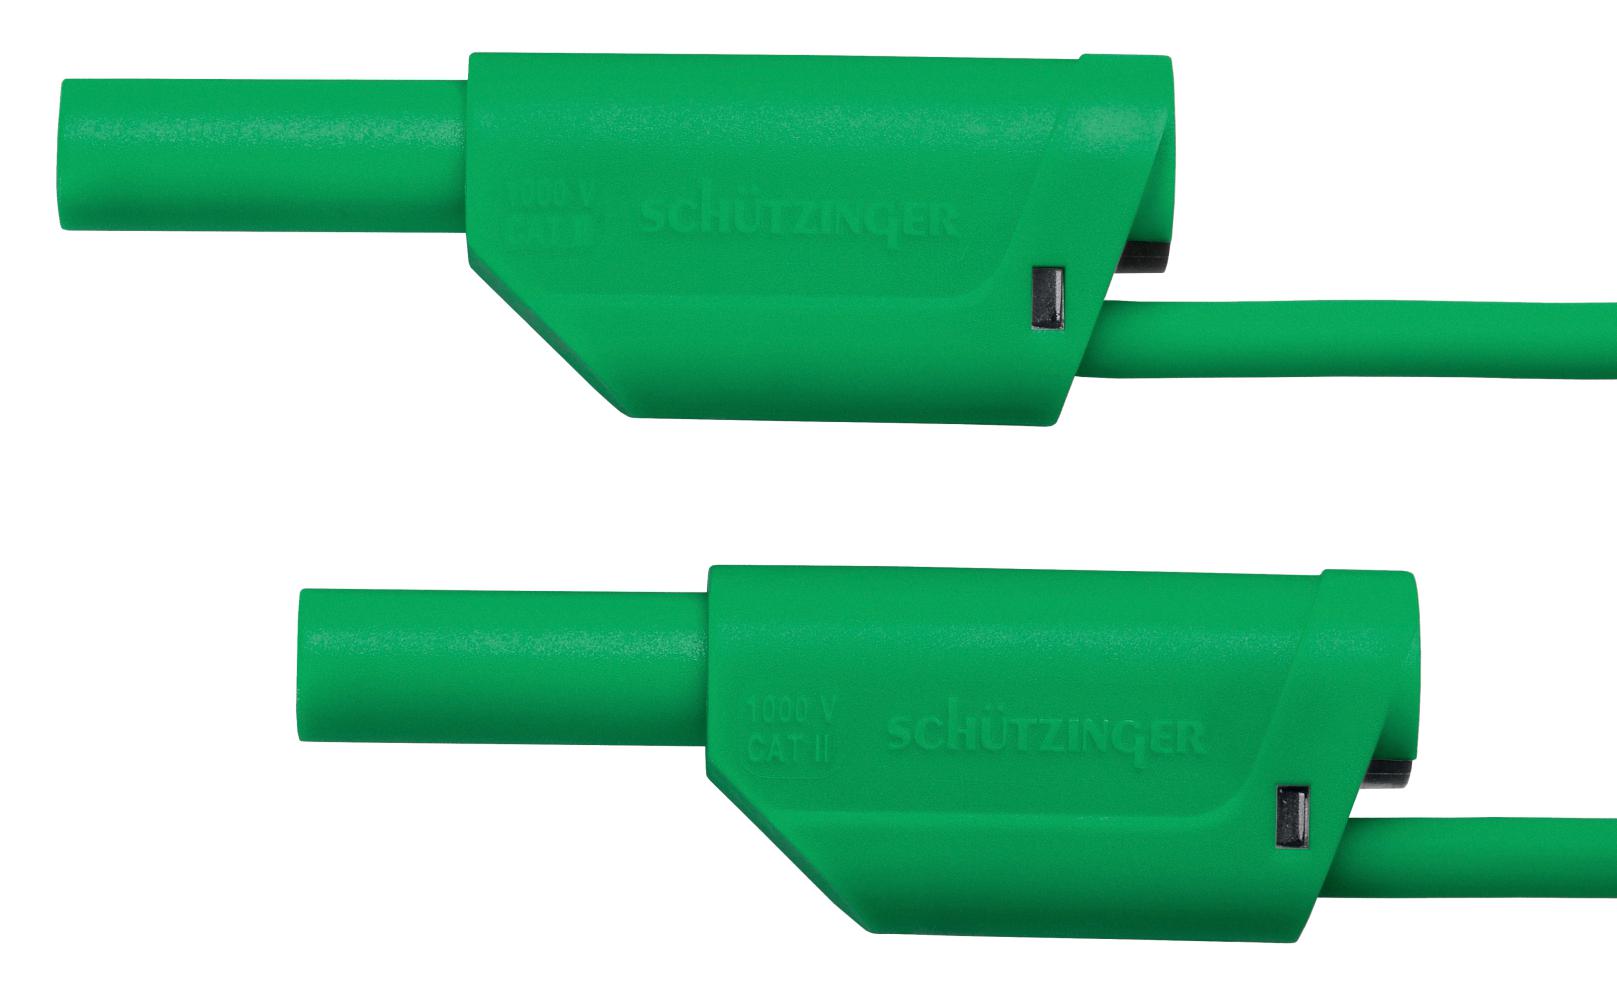 Schutzinger Vsfk 5000 / 1 / 50 / Gn Test Lead, Stackable Banana Plug, 500mm